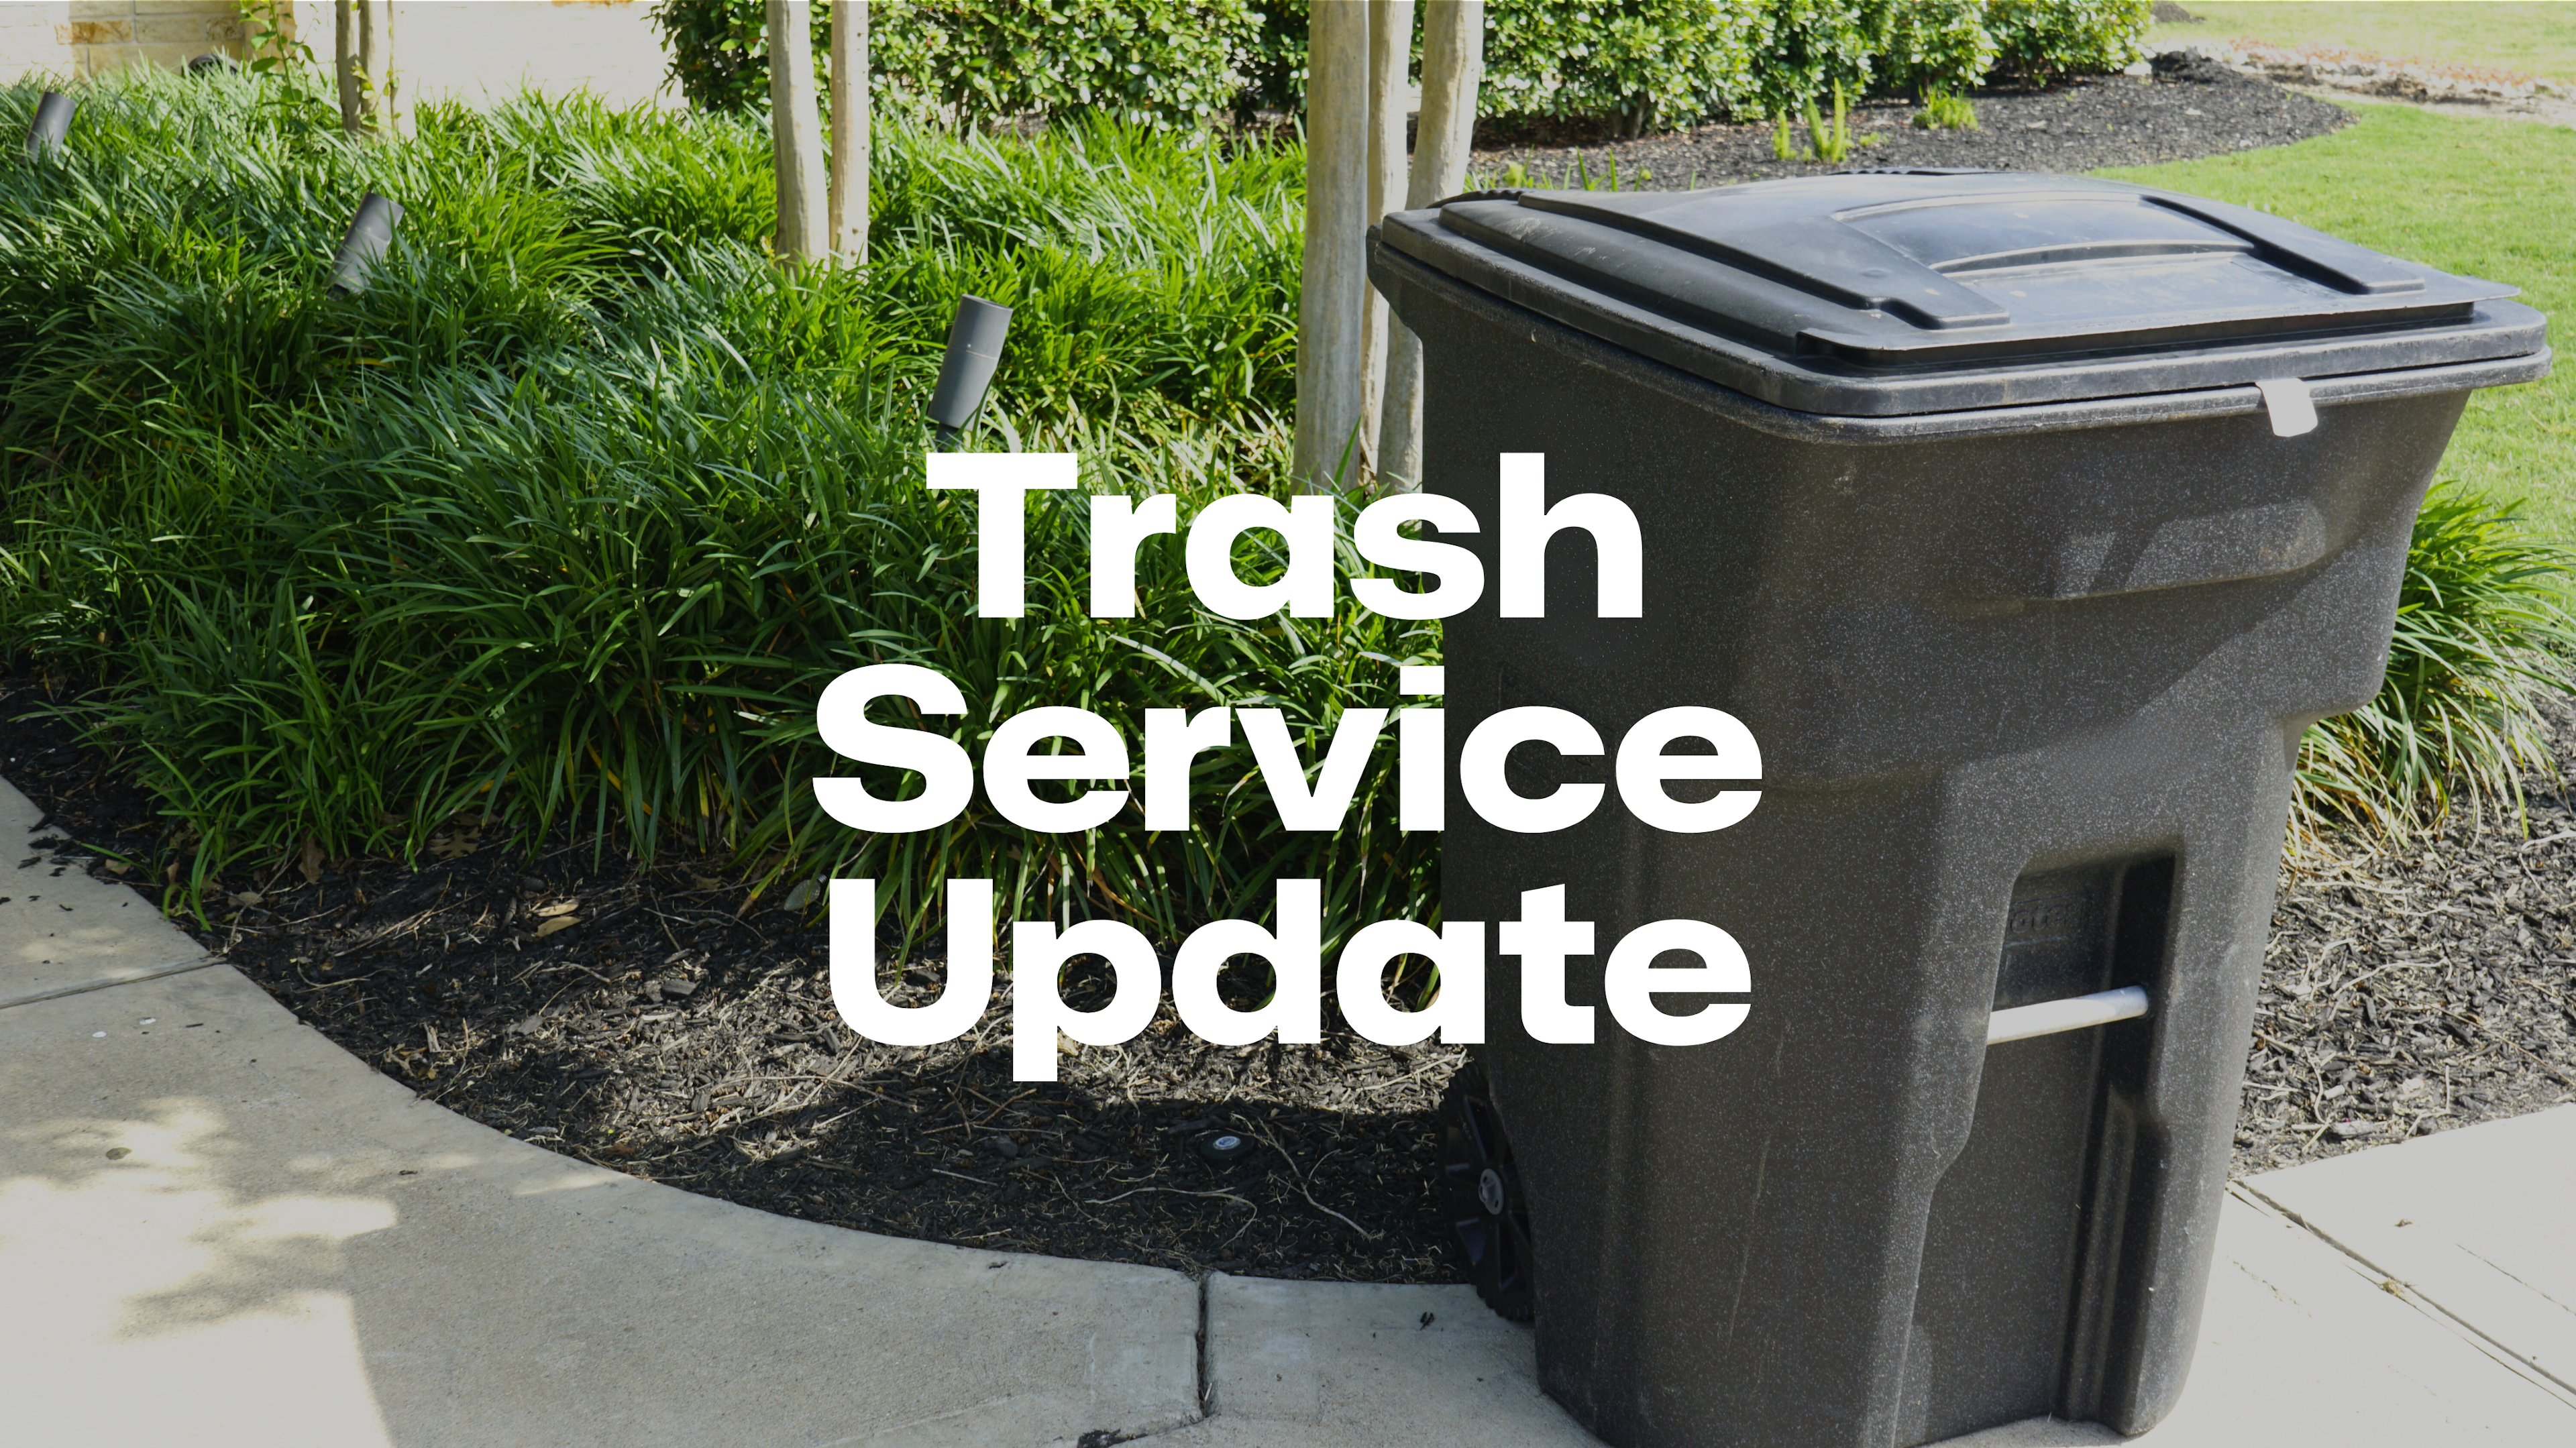 Trash Service Update copy.png